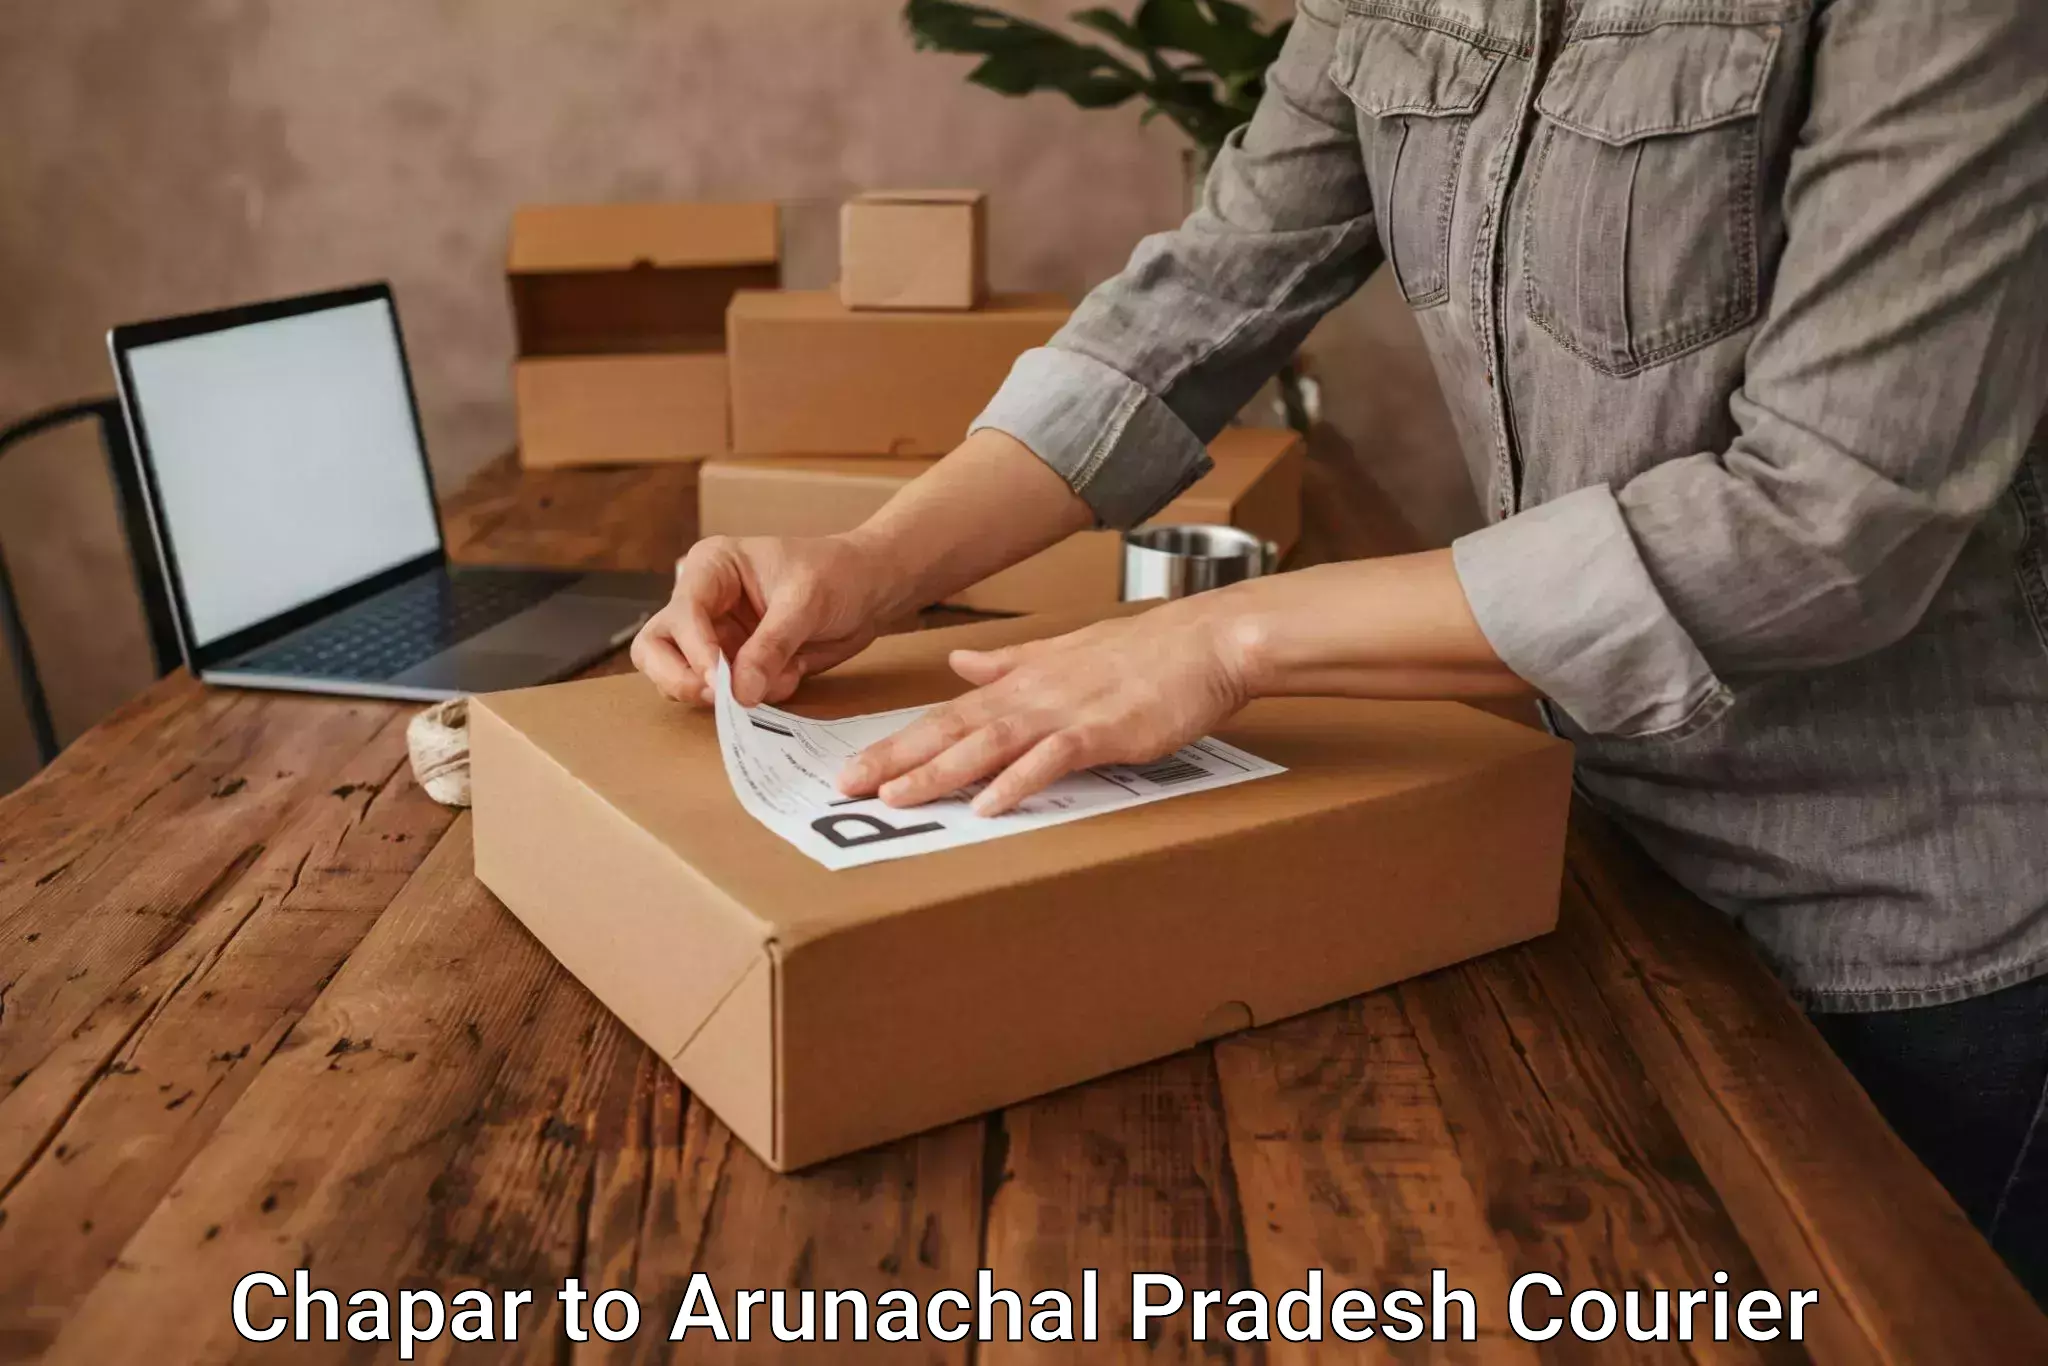 Advanced tracking systems Chapar to Arunachal Pradesh